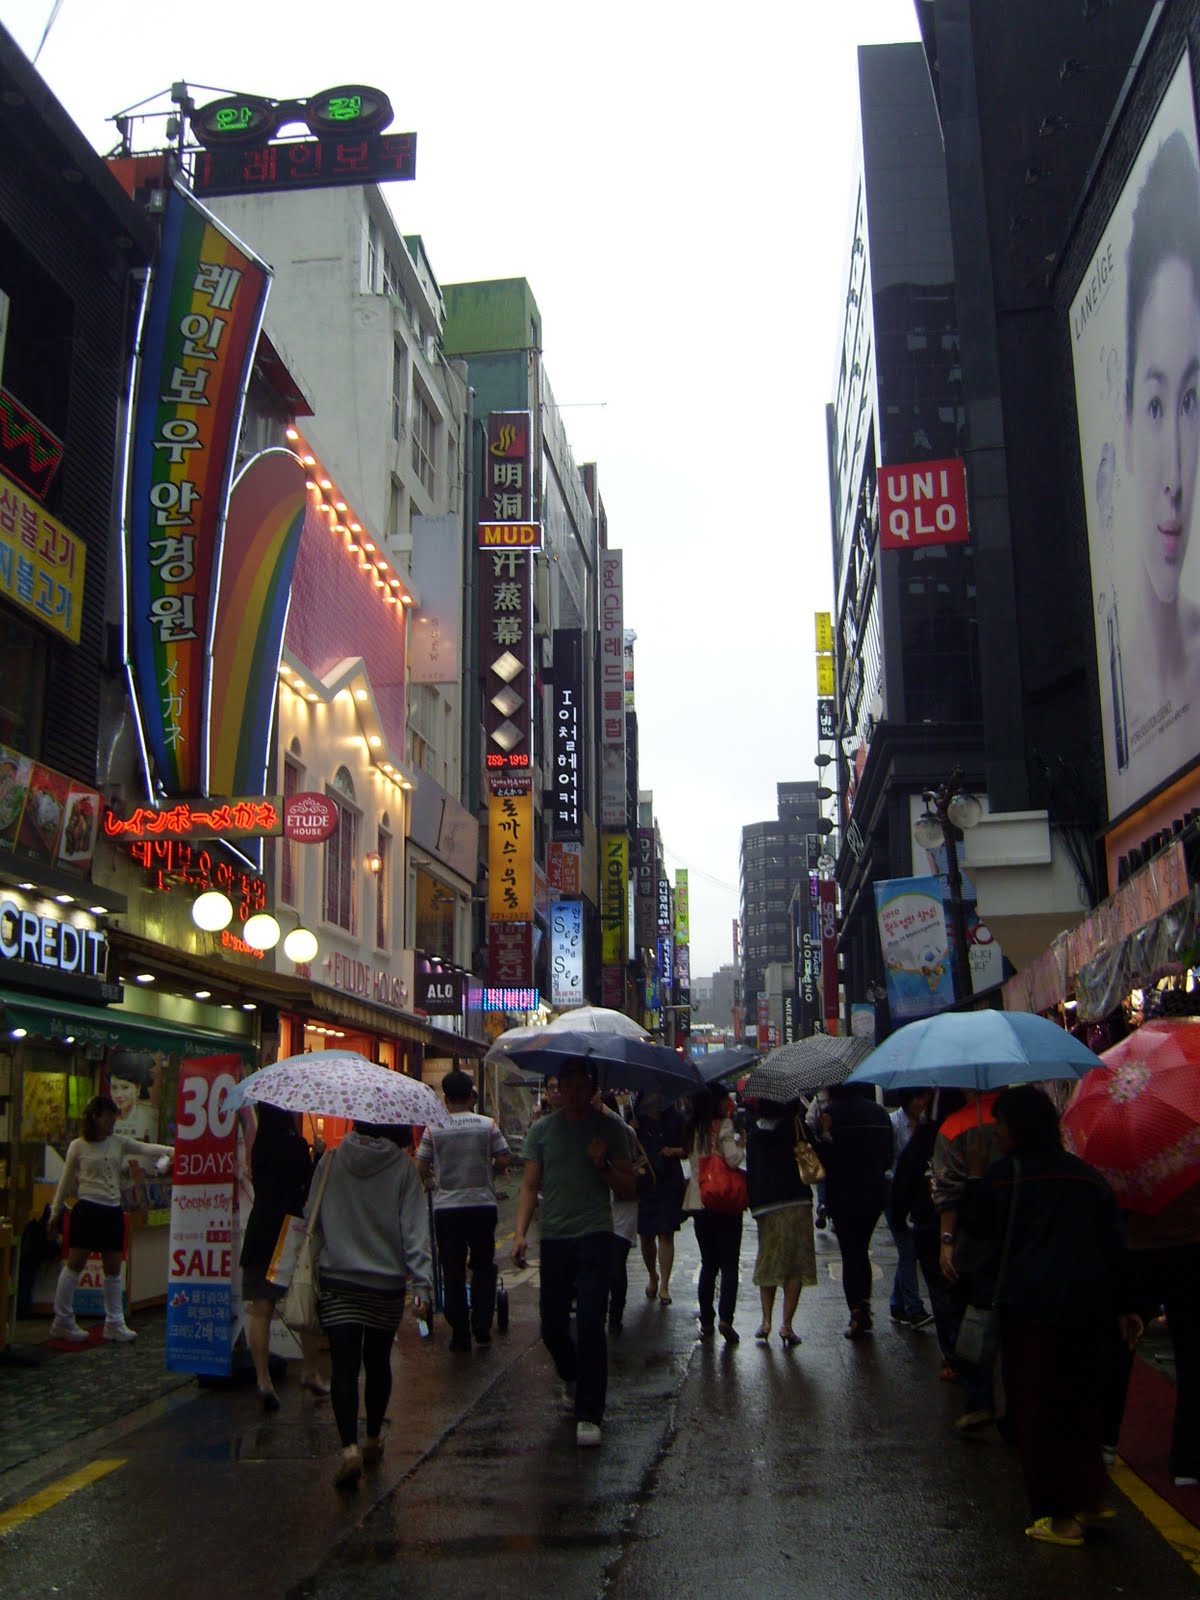 Michan Petite: South Korea: Shopping Streets and Markets